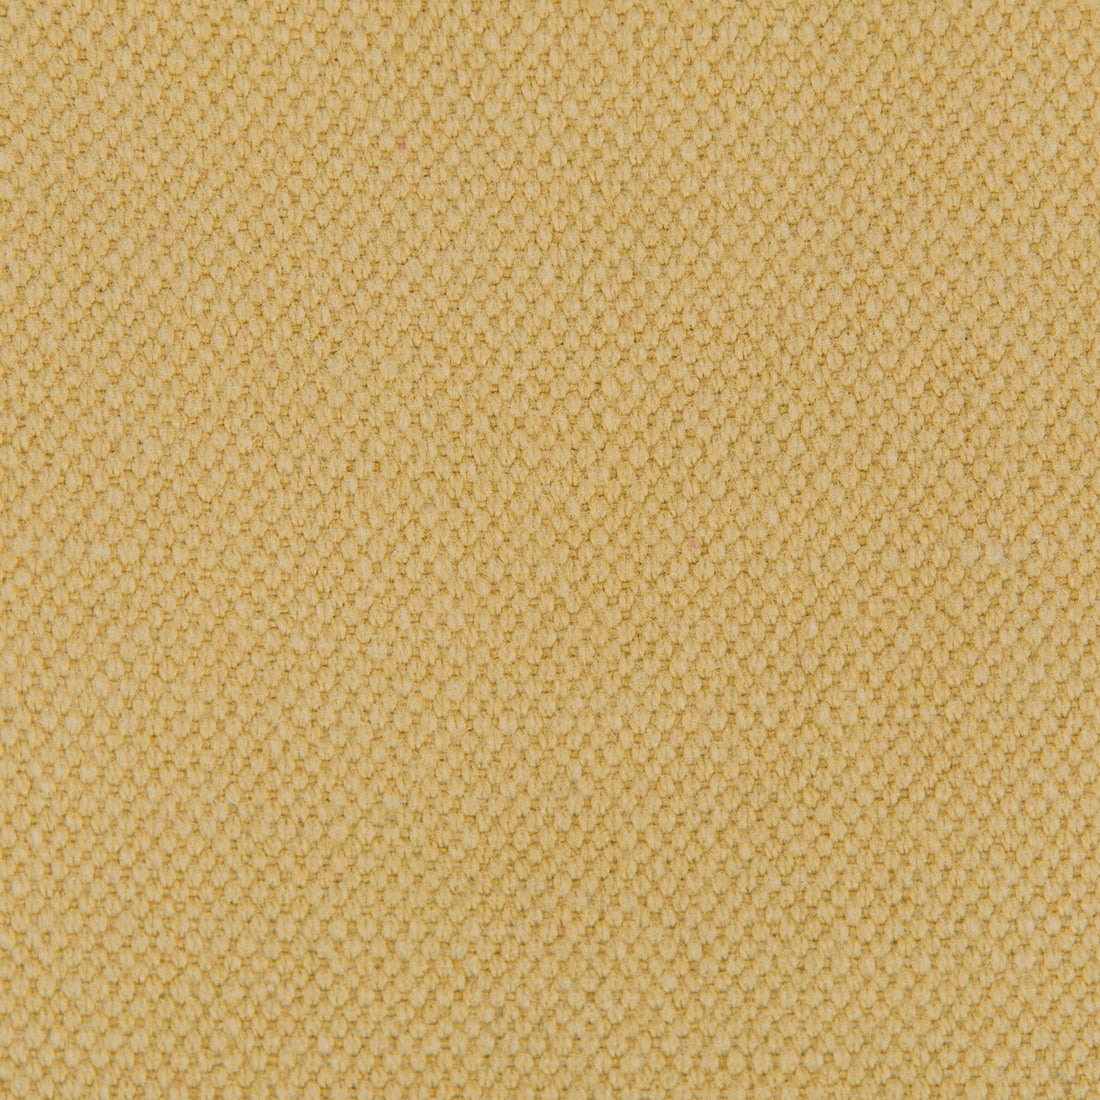 Lima fabric in oro color - pattern GDT5616.005.0 - by Gaston y Daniela in the Gaston Nuevo Mundo collection